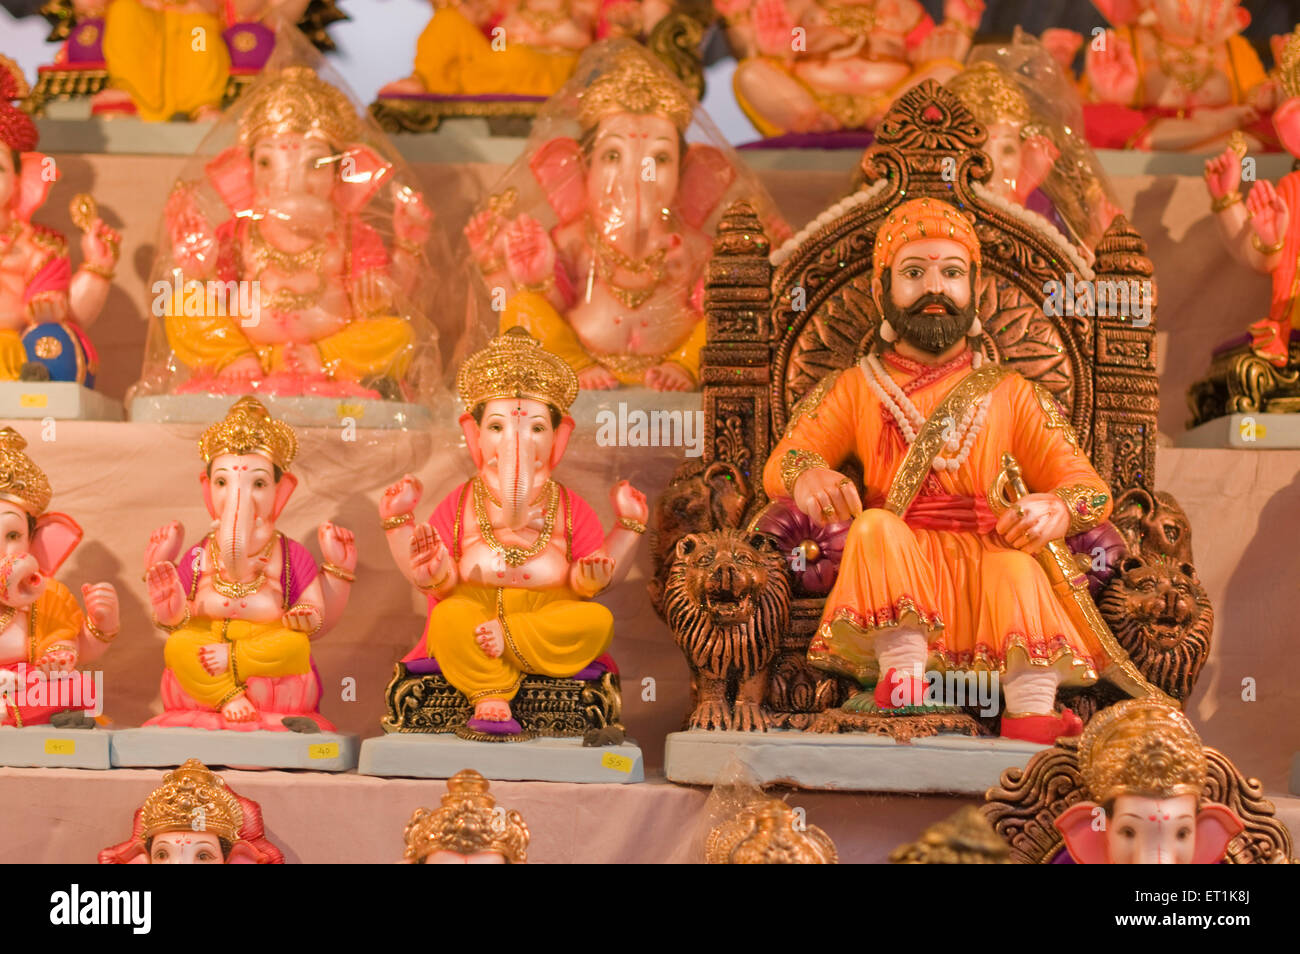 Several idols of Lord Ganesh with Maratha ruler Shivaji Pune Maharashtra India Asia Aug 2011 Stock Photo